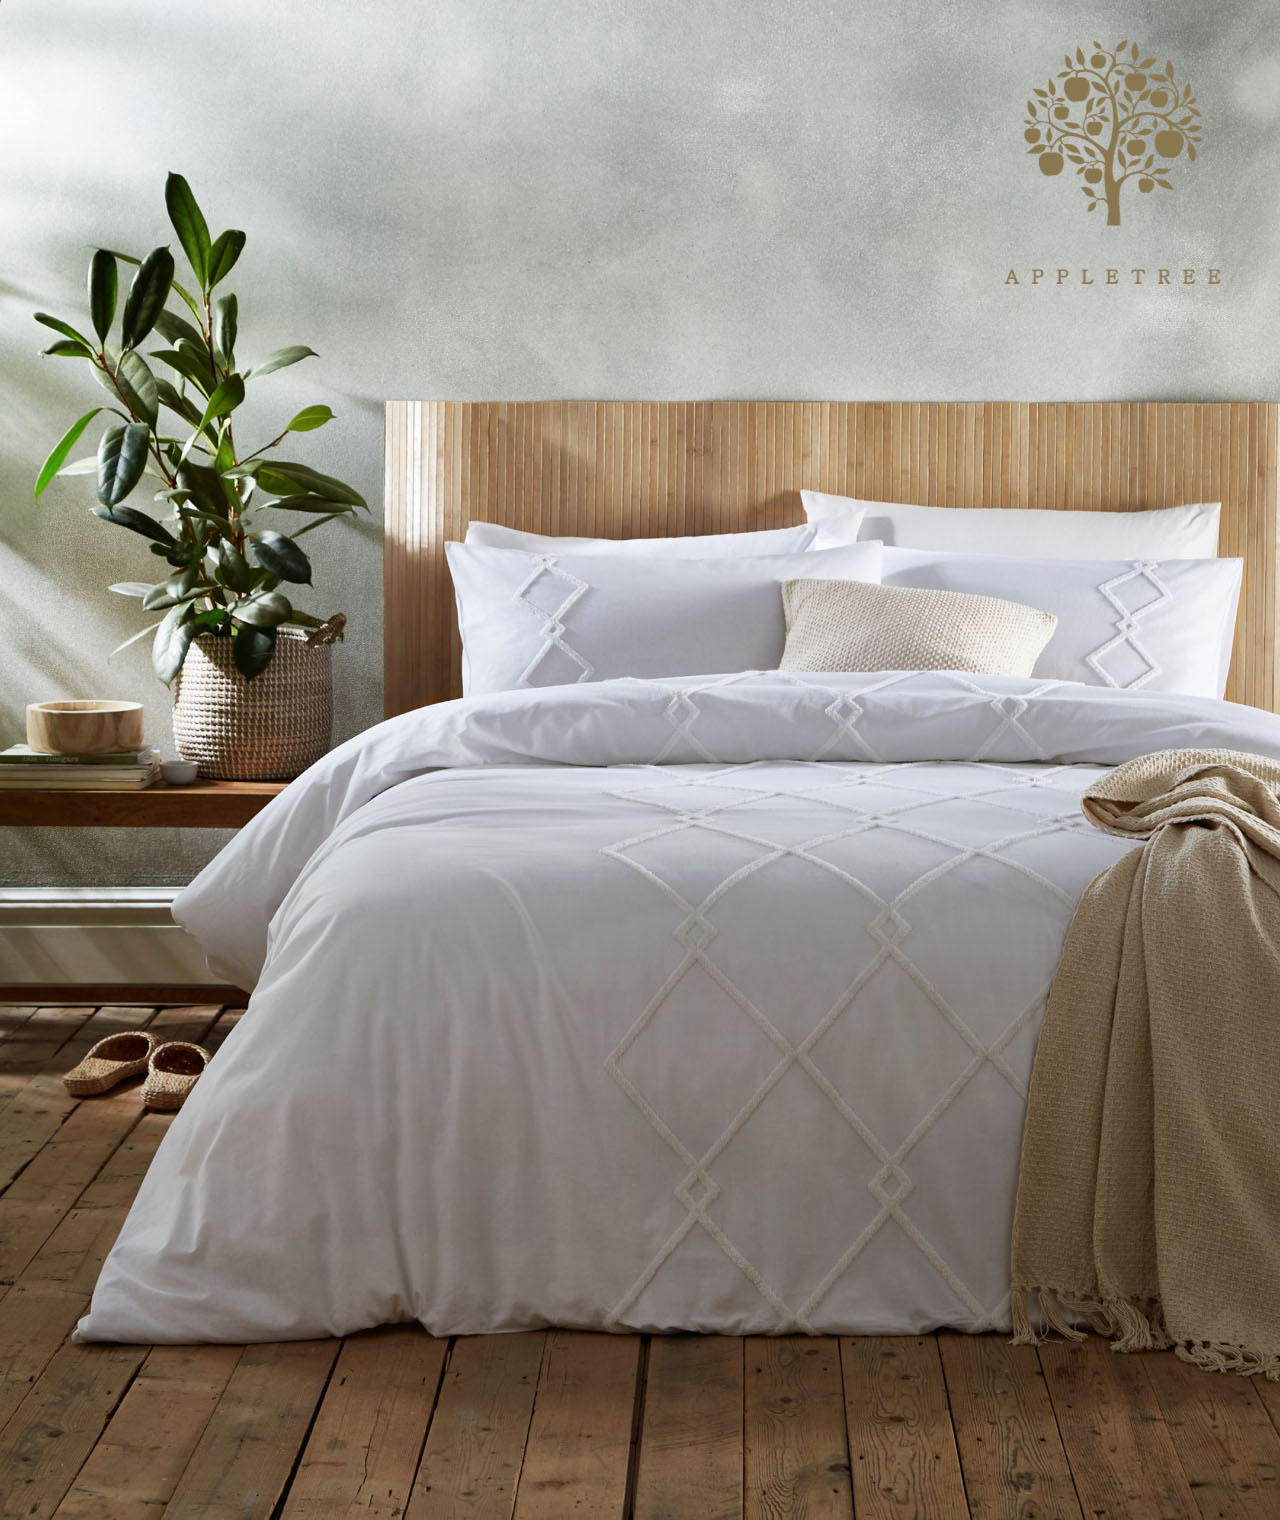 How to Choose Bed Linen for Maximum Comfort | Next UK